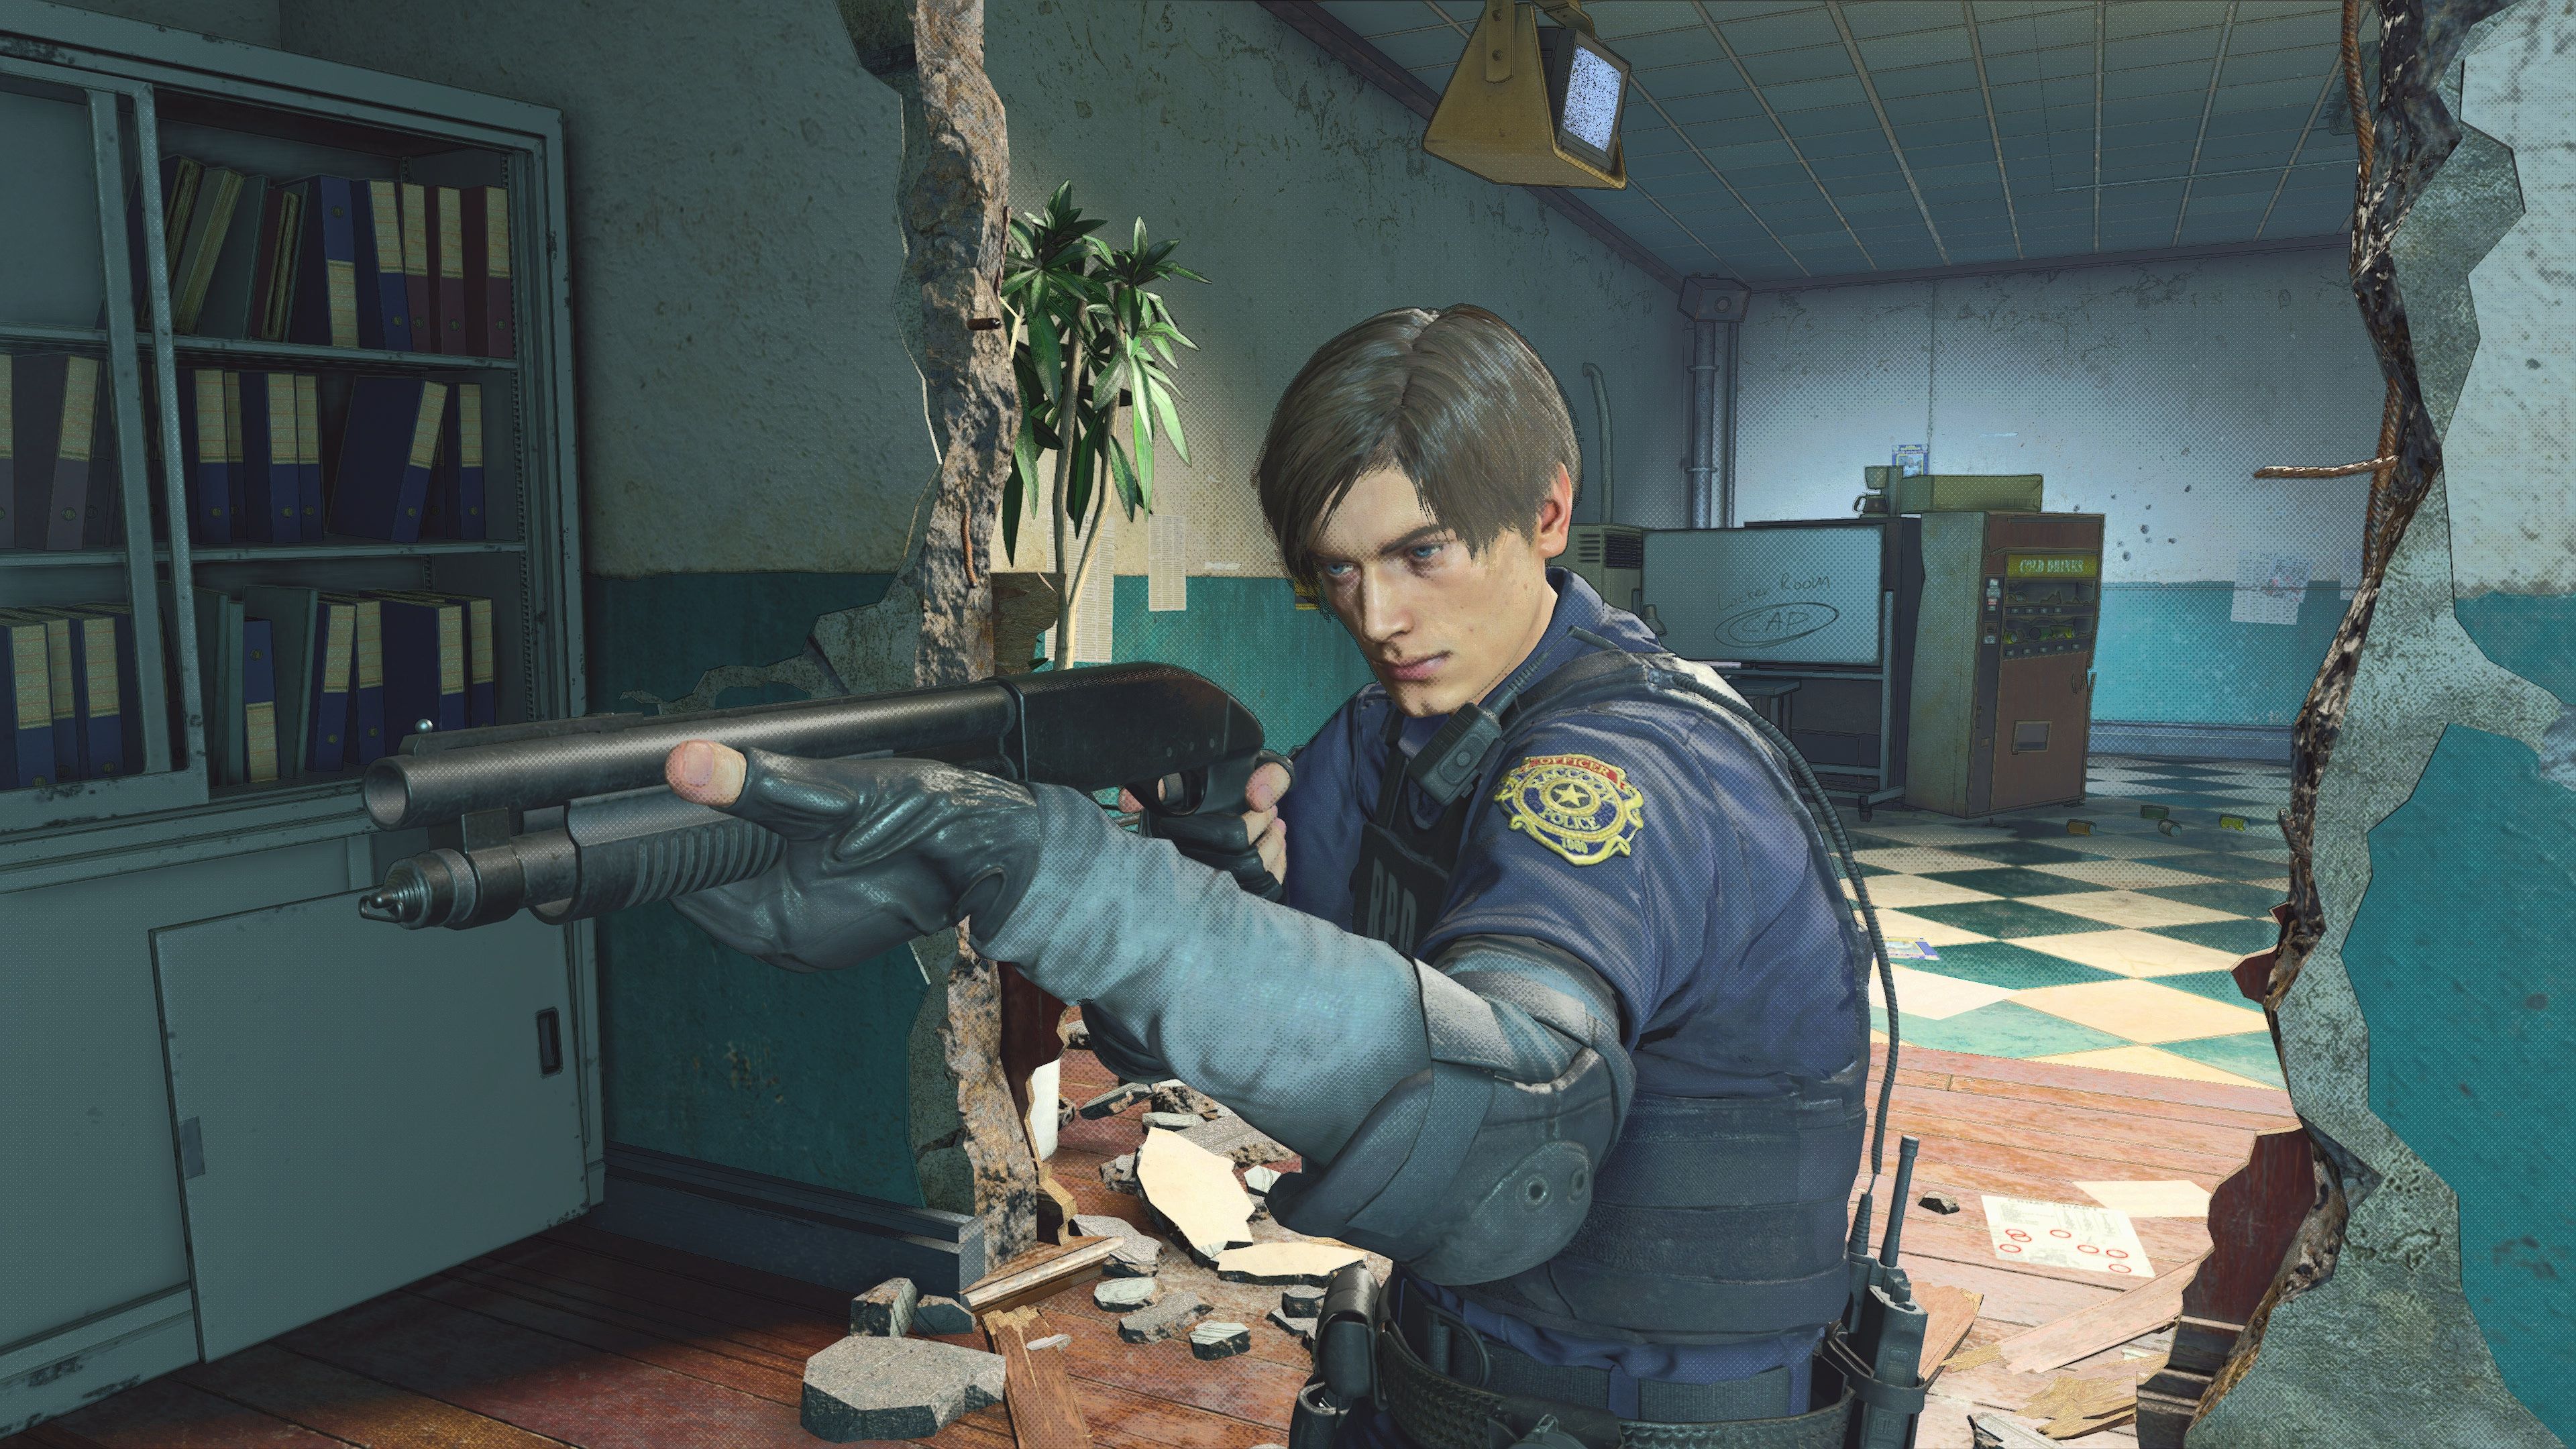 Resident Evil 5: How Capcom Failed PC Co-op for a Decade